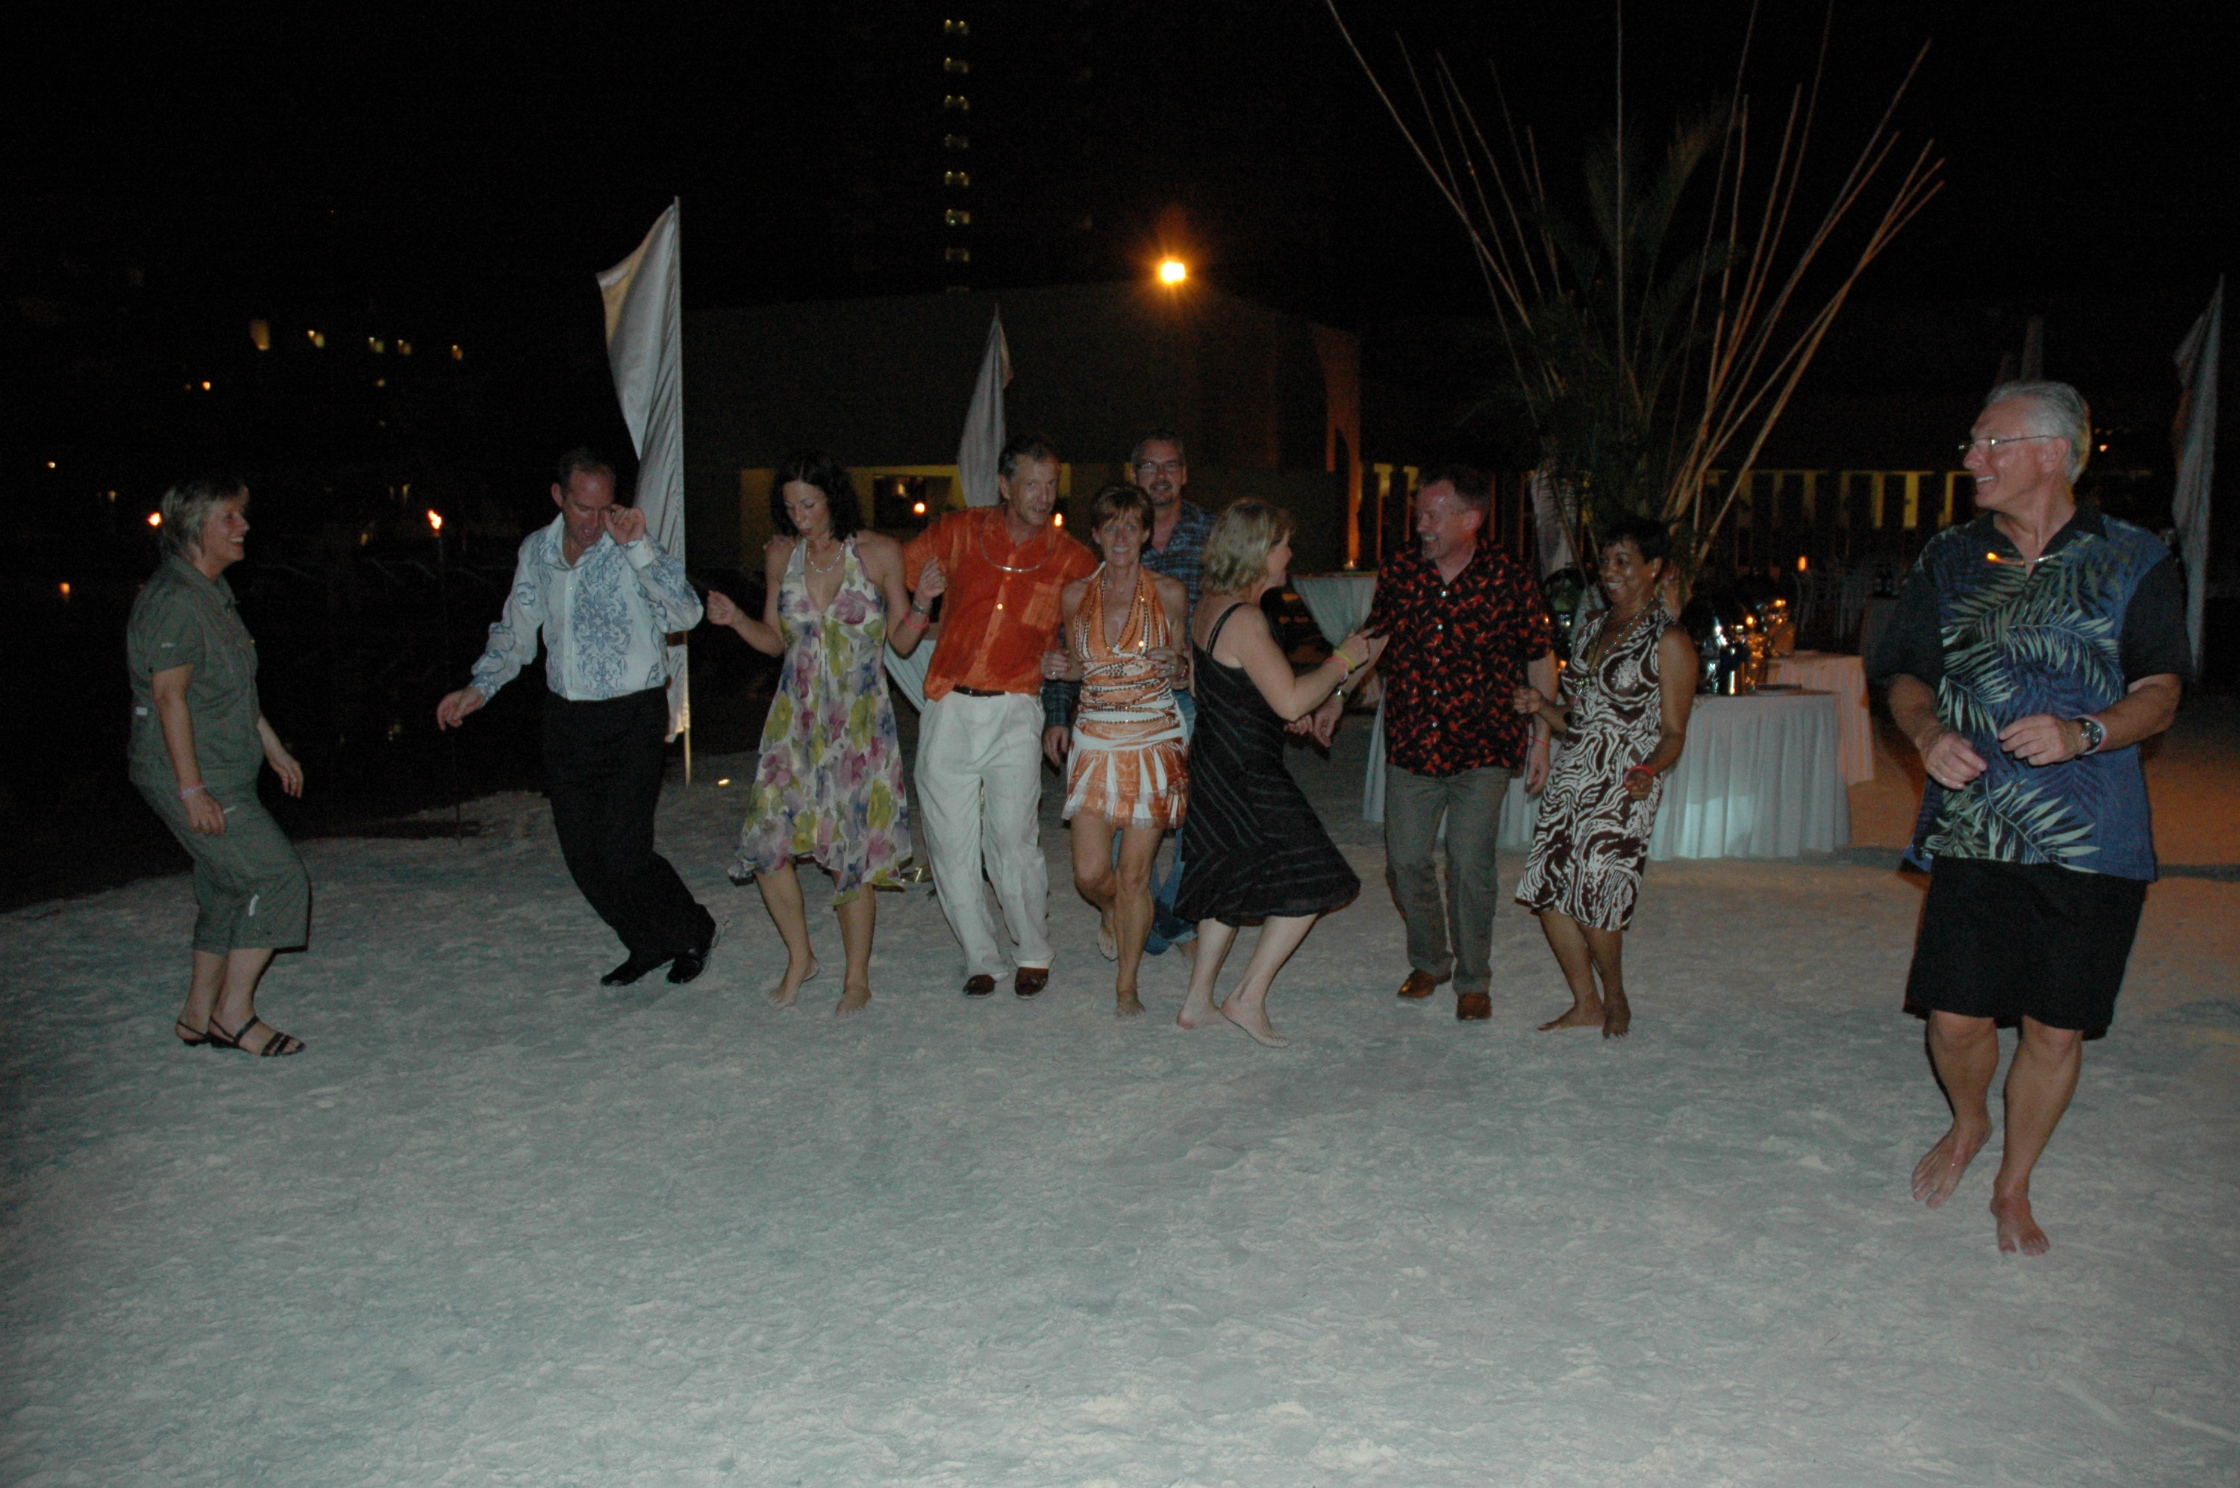 Kickin' up some sand in Cancun--yeah baby!